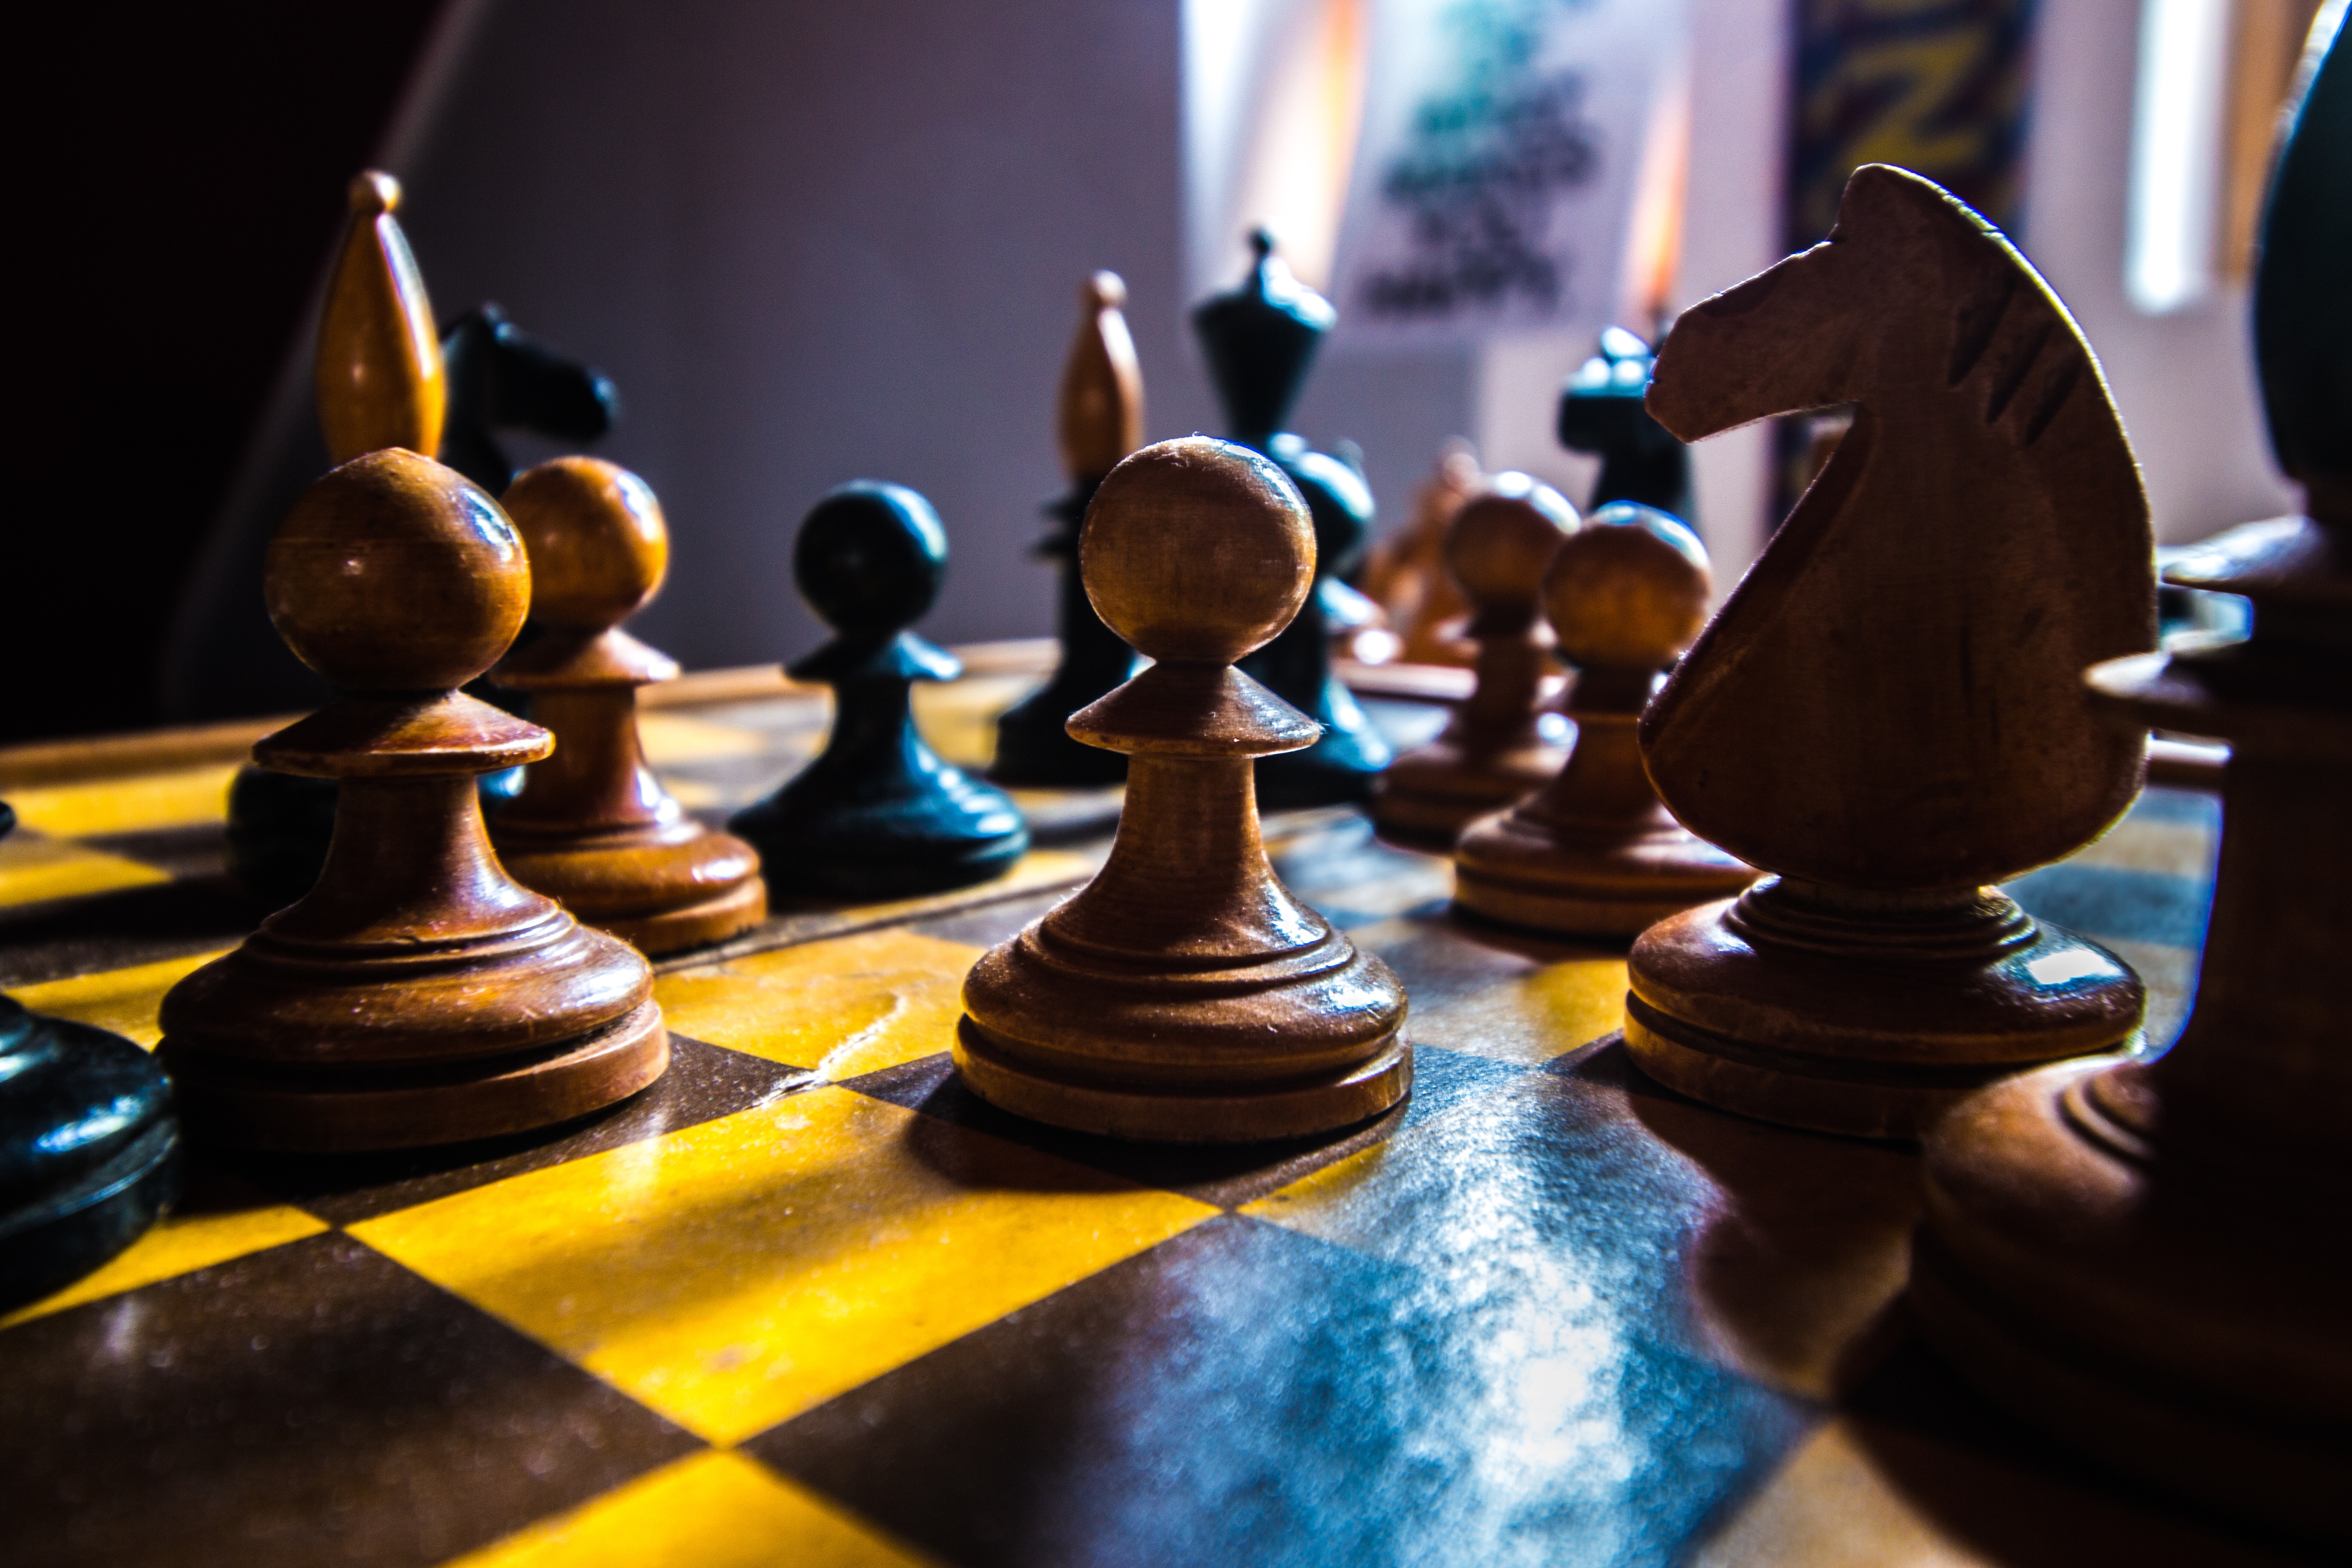 Бесплатное фото Шахматная доска с шахватами